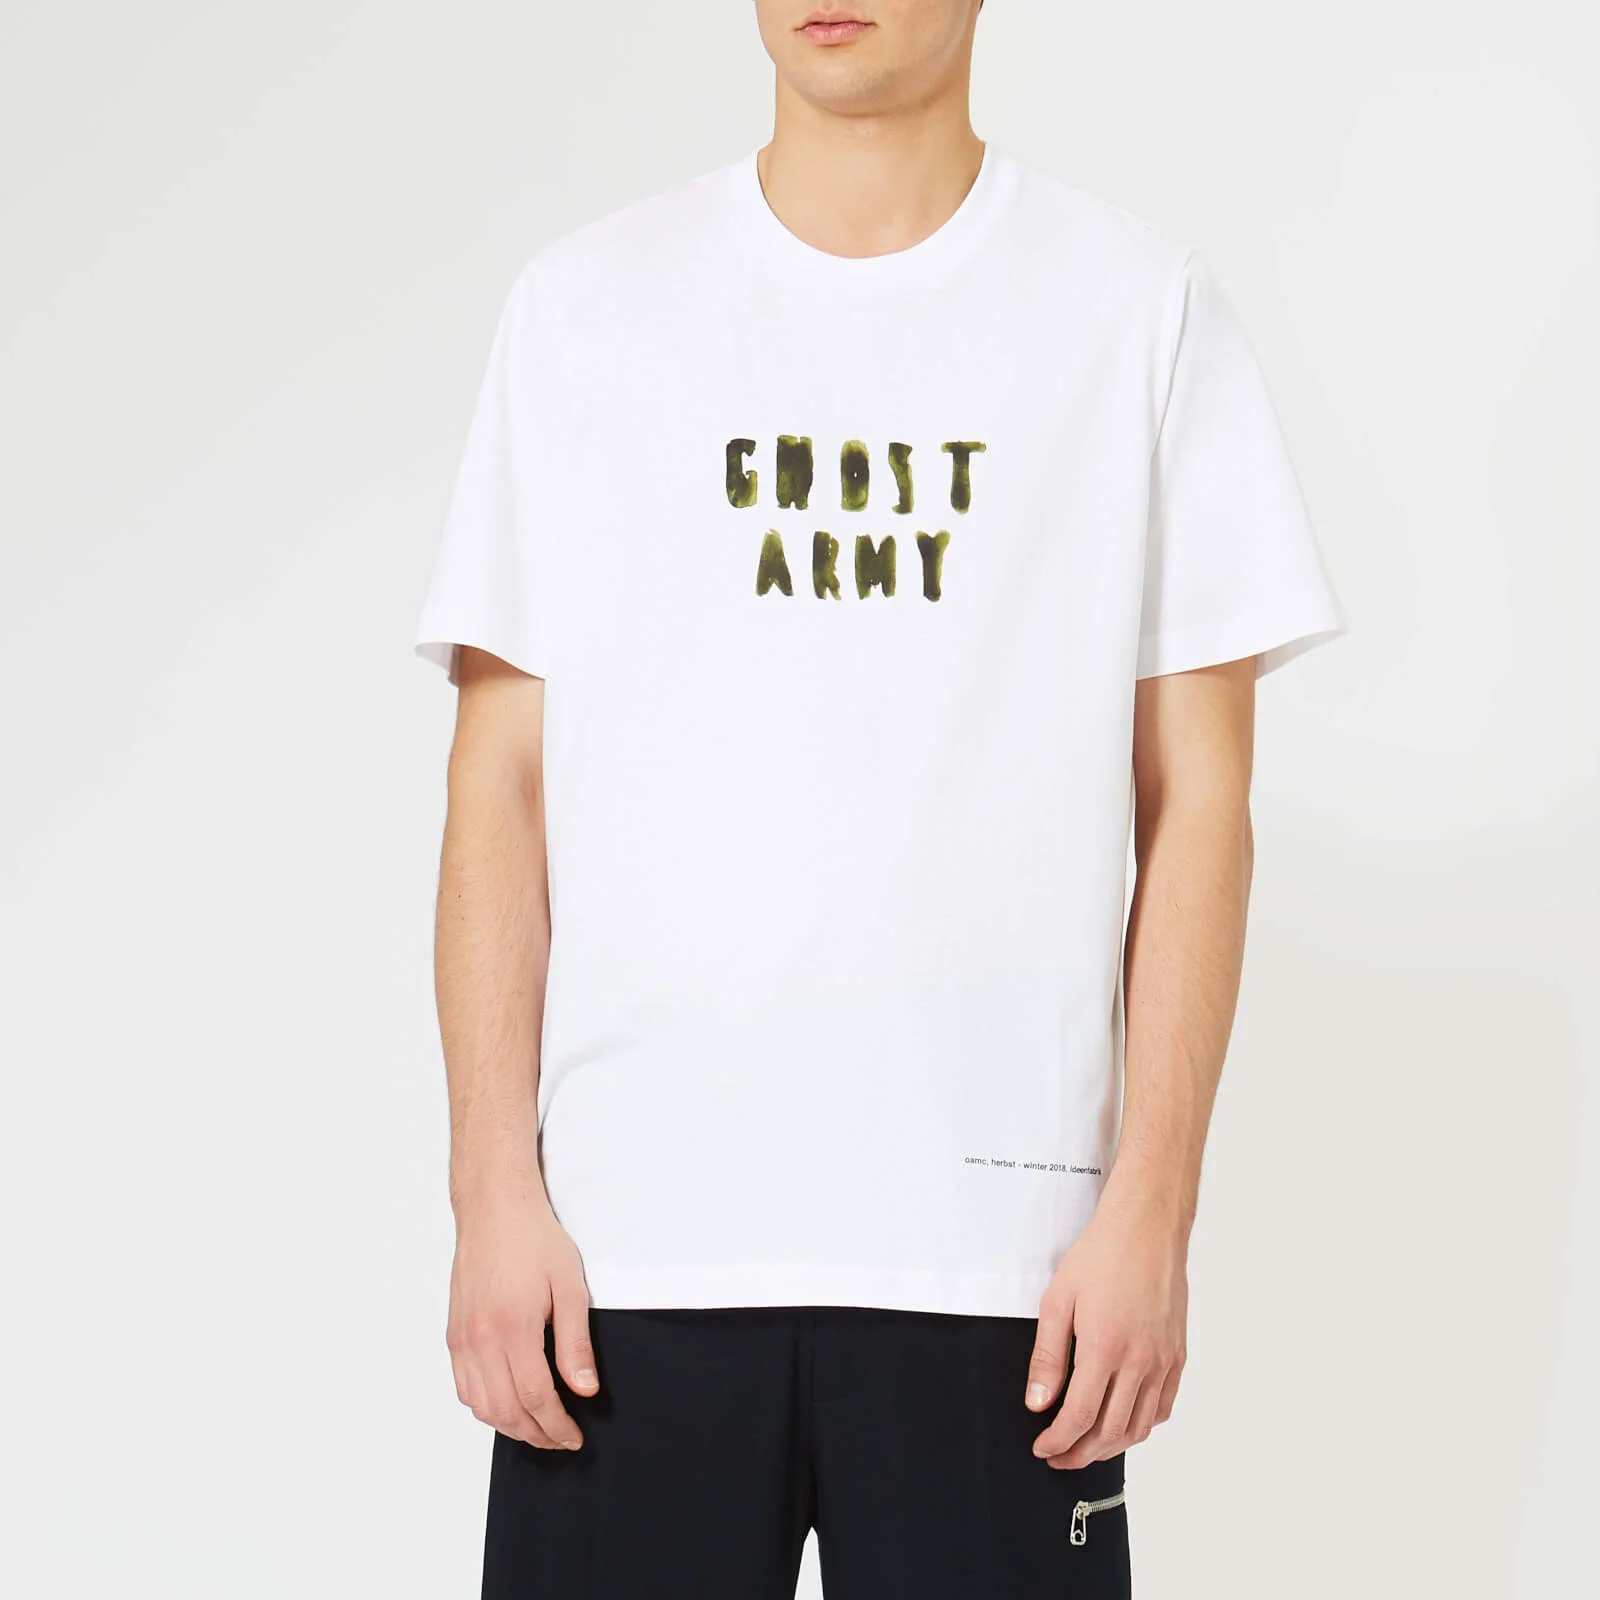 OAMC Men's Ghost Army T-Shirt - White/Khaki Image 1